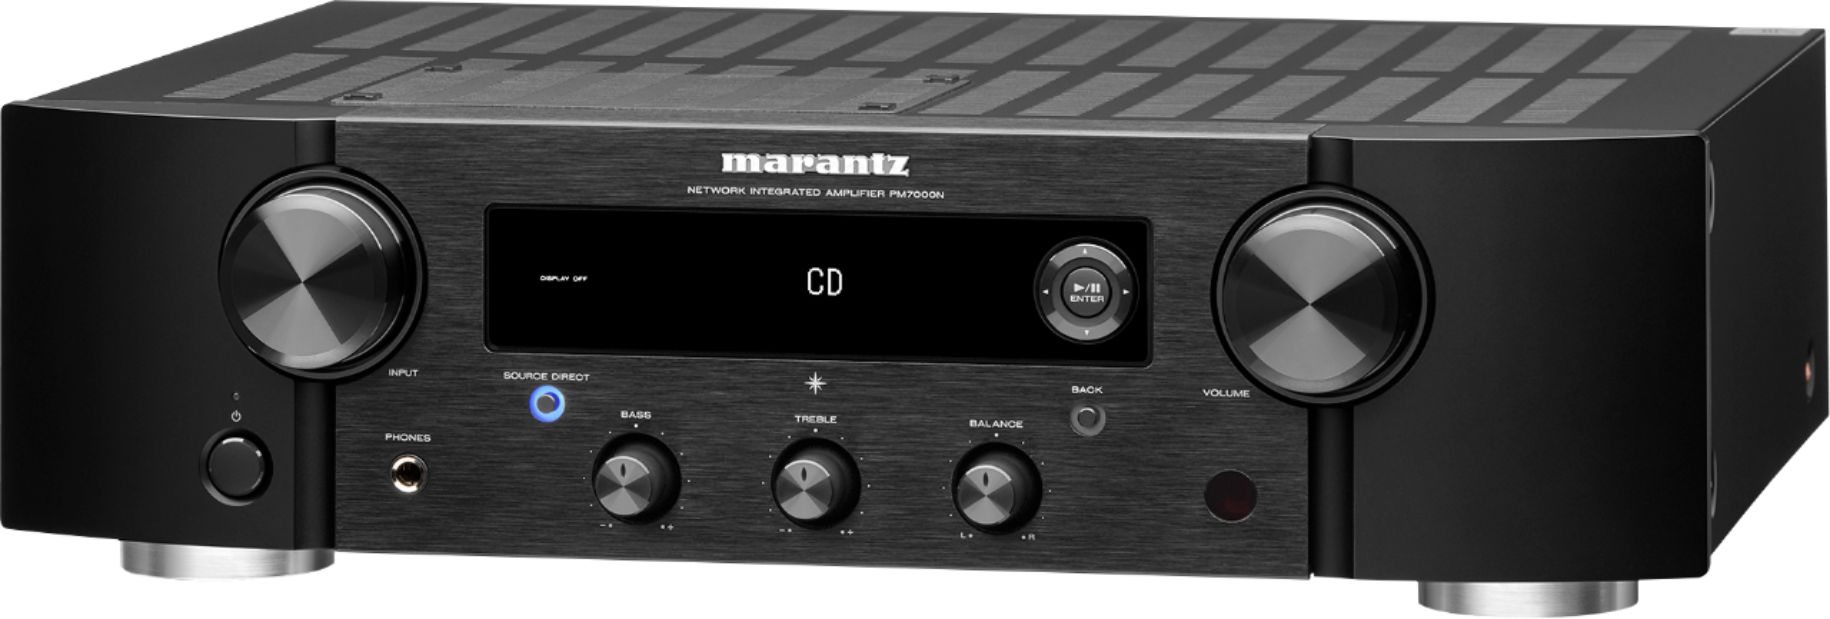 Marantz - PM7000N Integrated Hi-Fi Amplifier HEOS Built-in Amazon Alexa Compatibility Digital & Analog Sources - Black